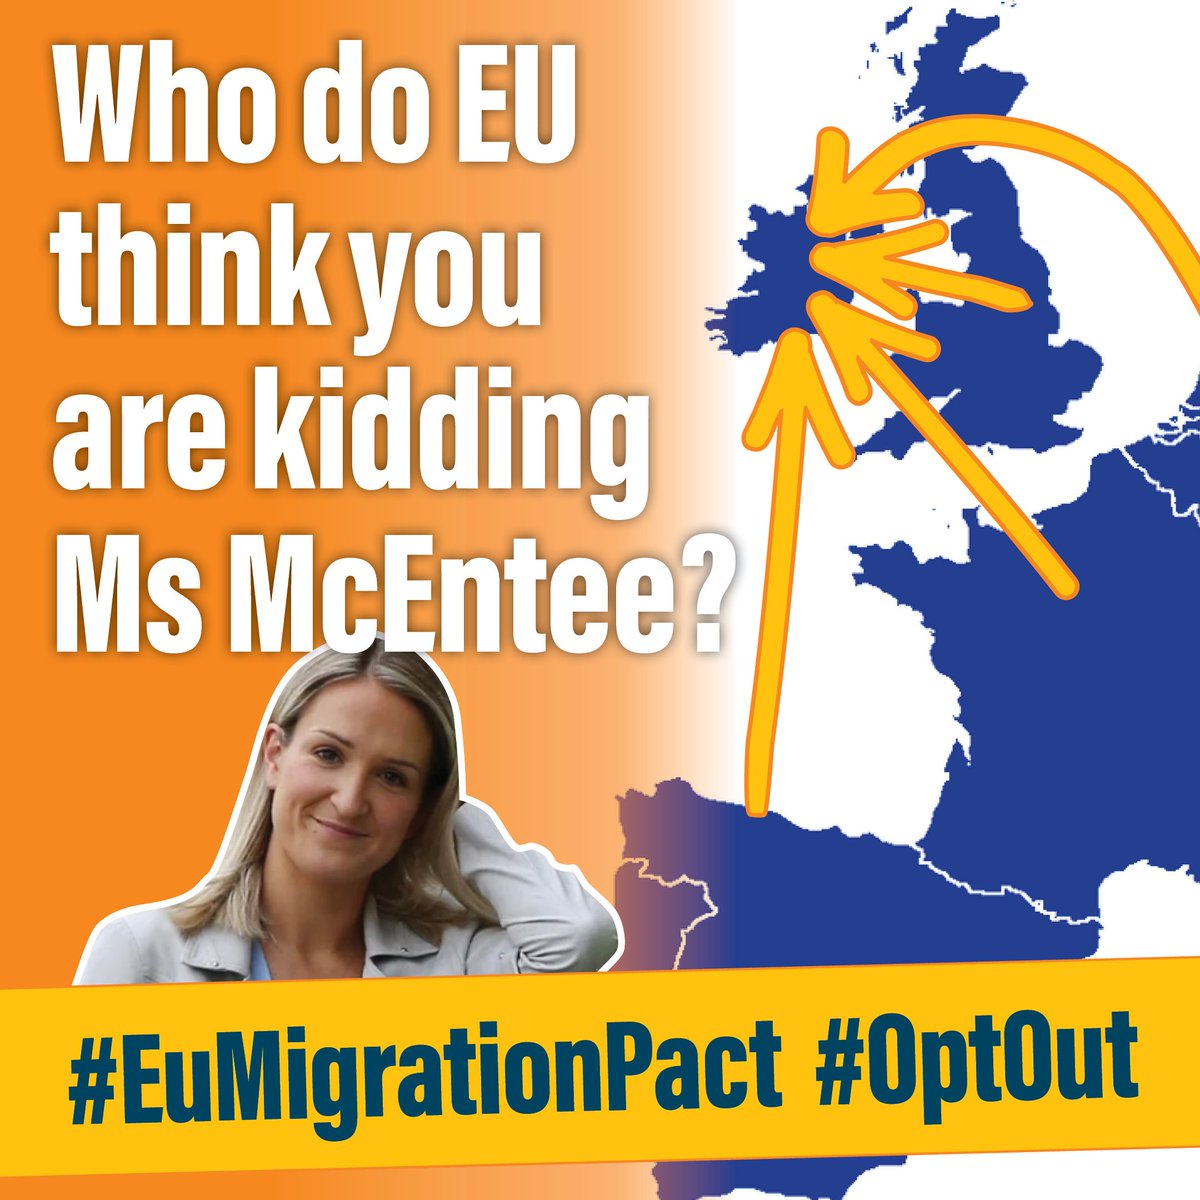 Vote #OptOut #ImmigrationPact 
#HaplessHarris & #HaplessHelen must go!